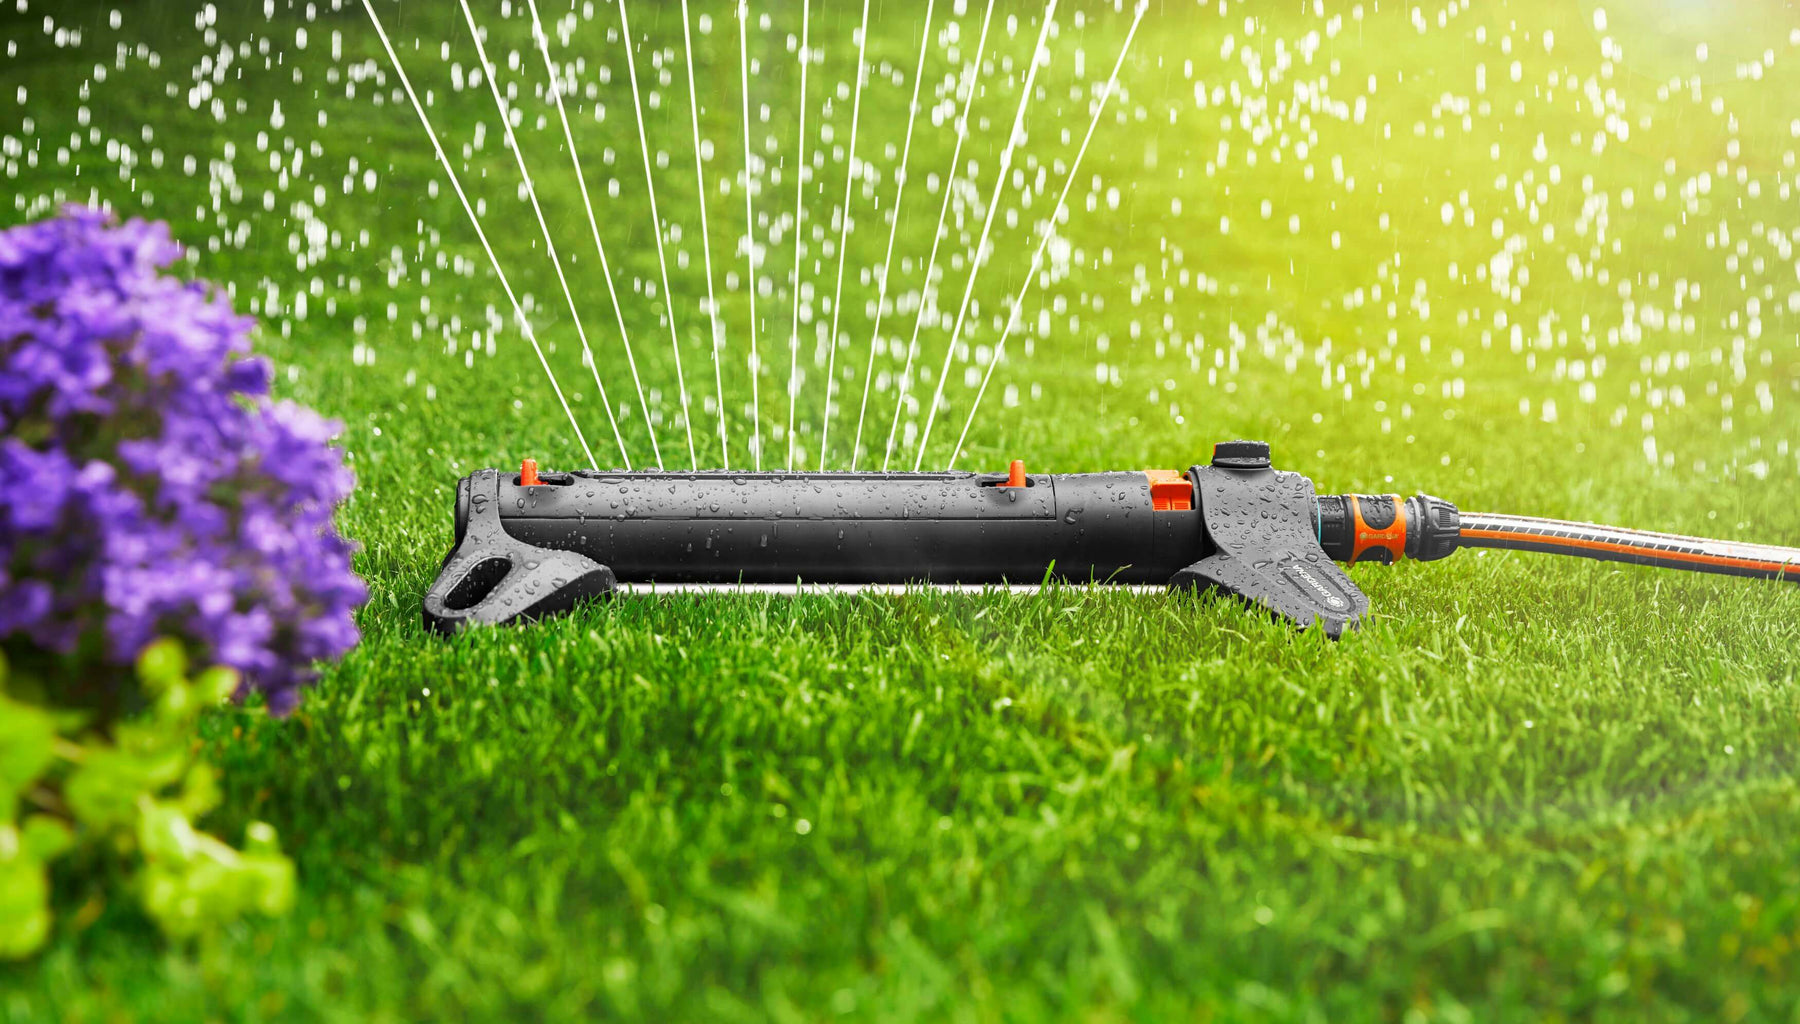 What makes a good mobile garden sprinkler?